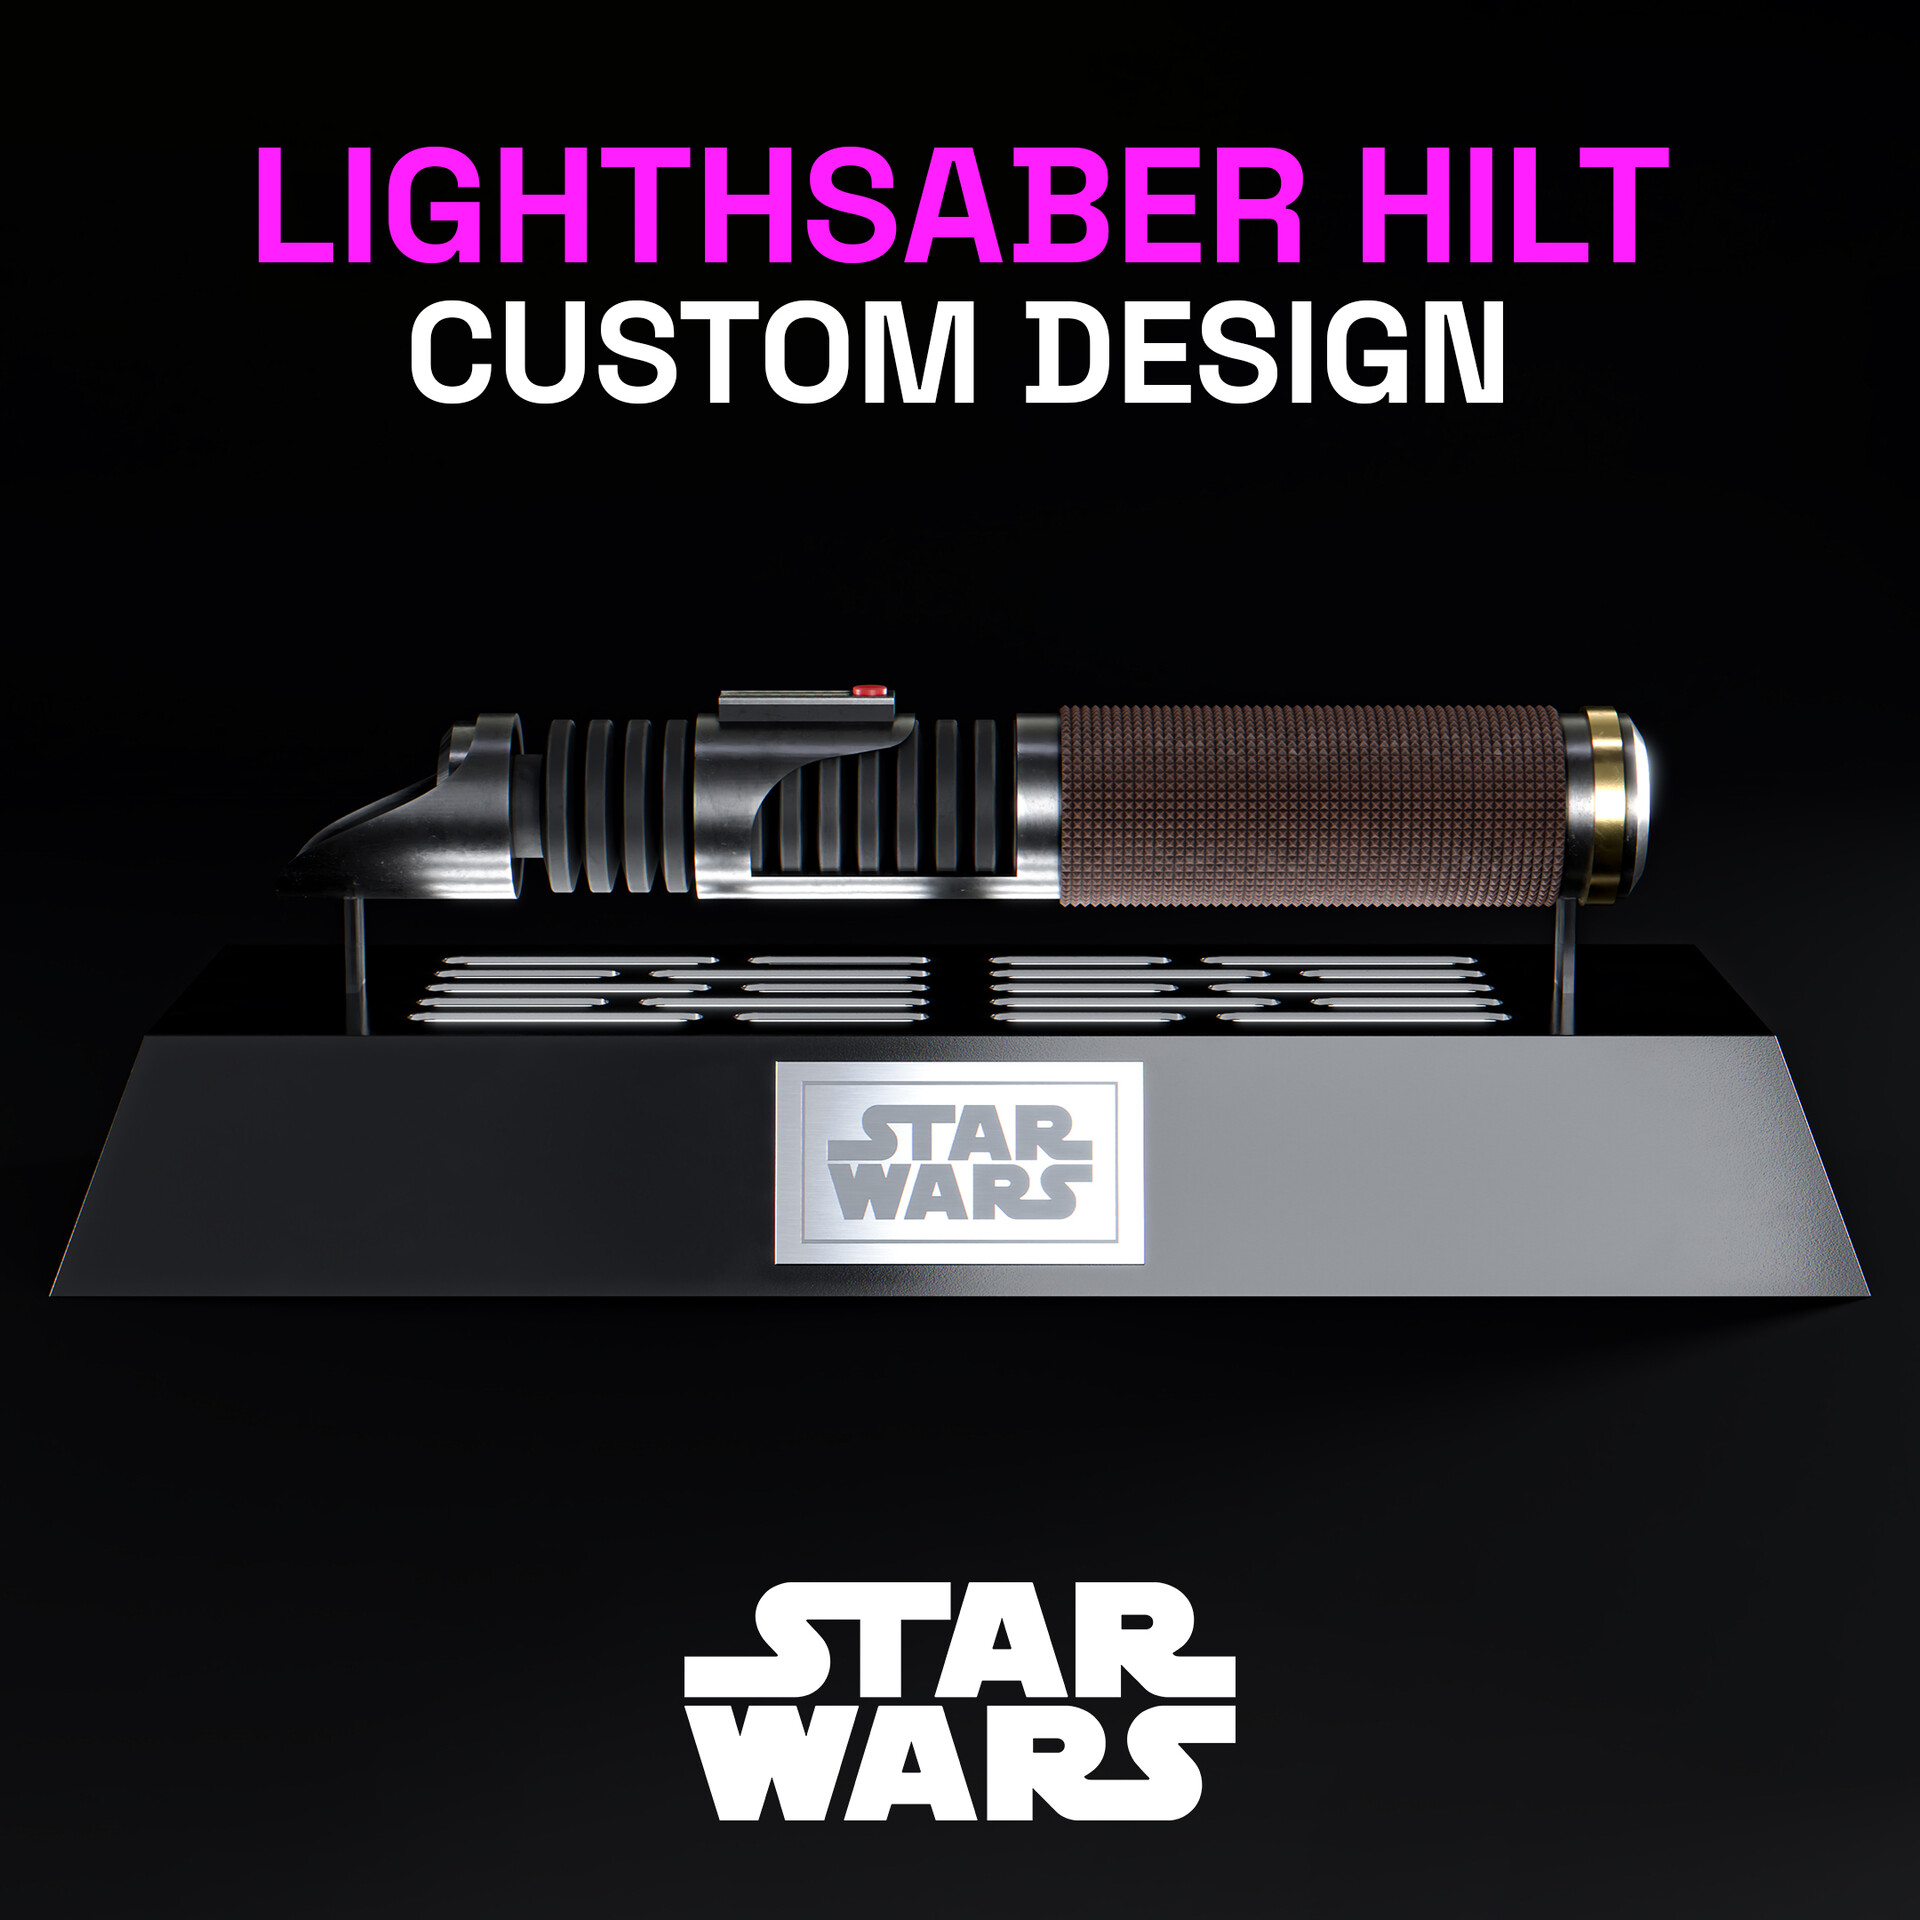 custom lightsaber hilt designs